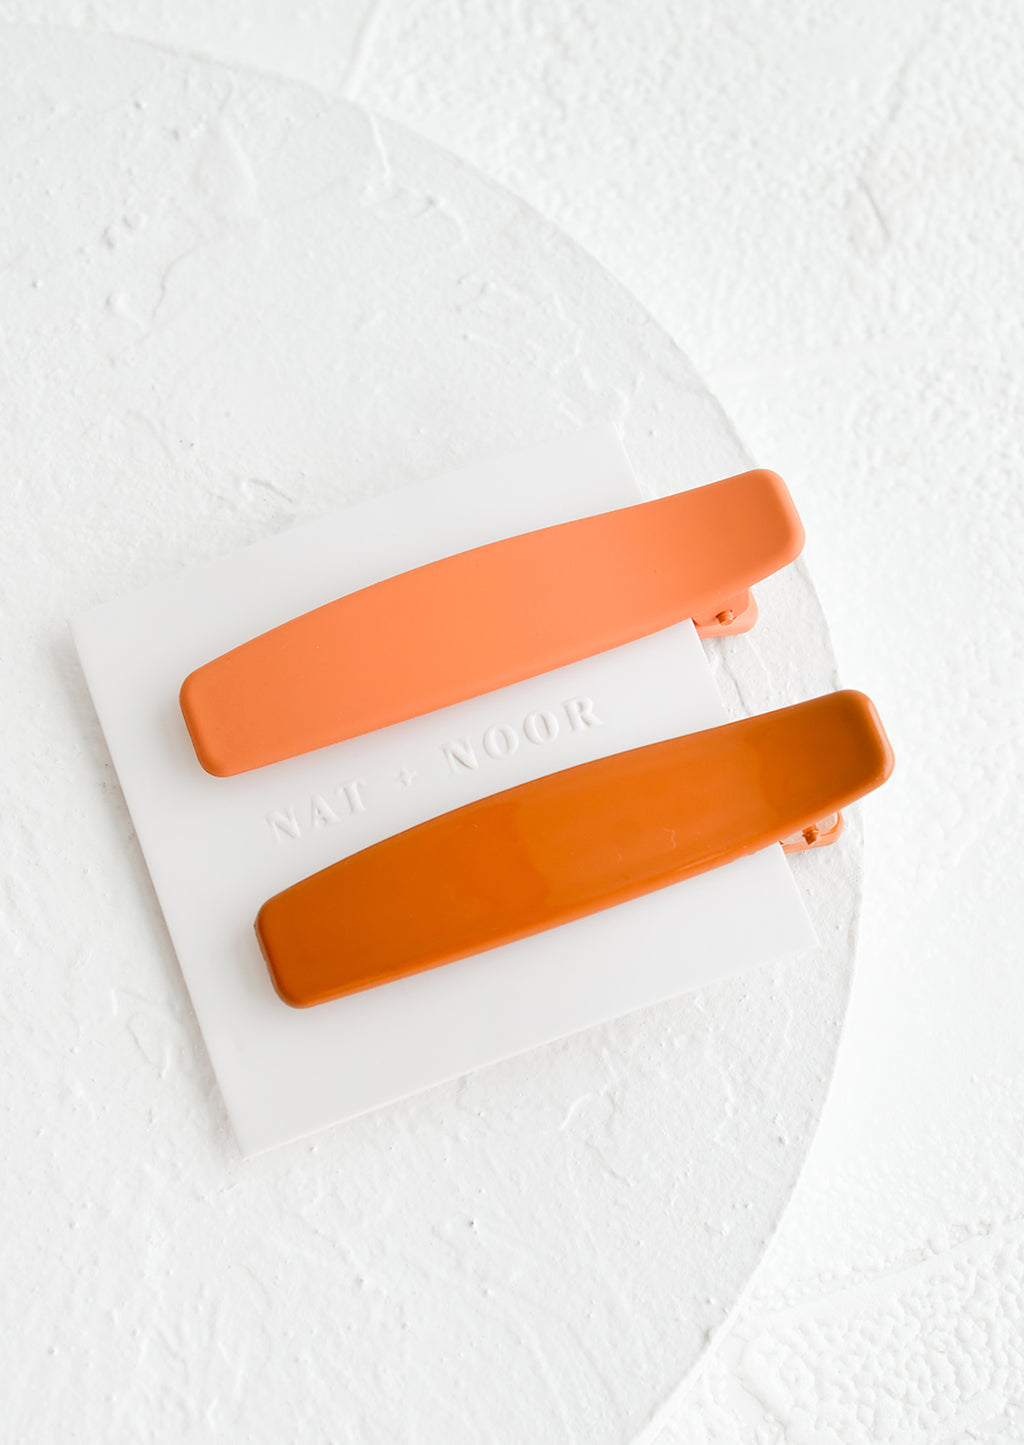 Peach / Terracota: A pair of hair clips with one terracotta and one peach.